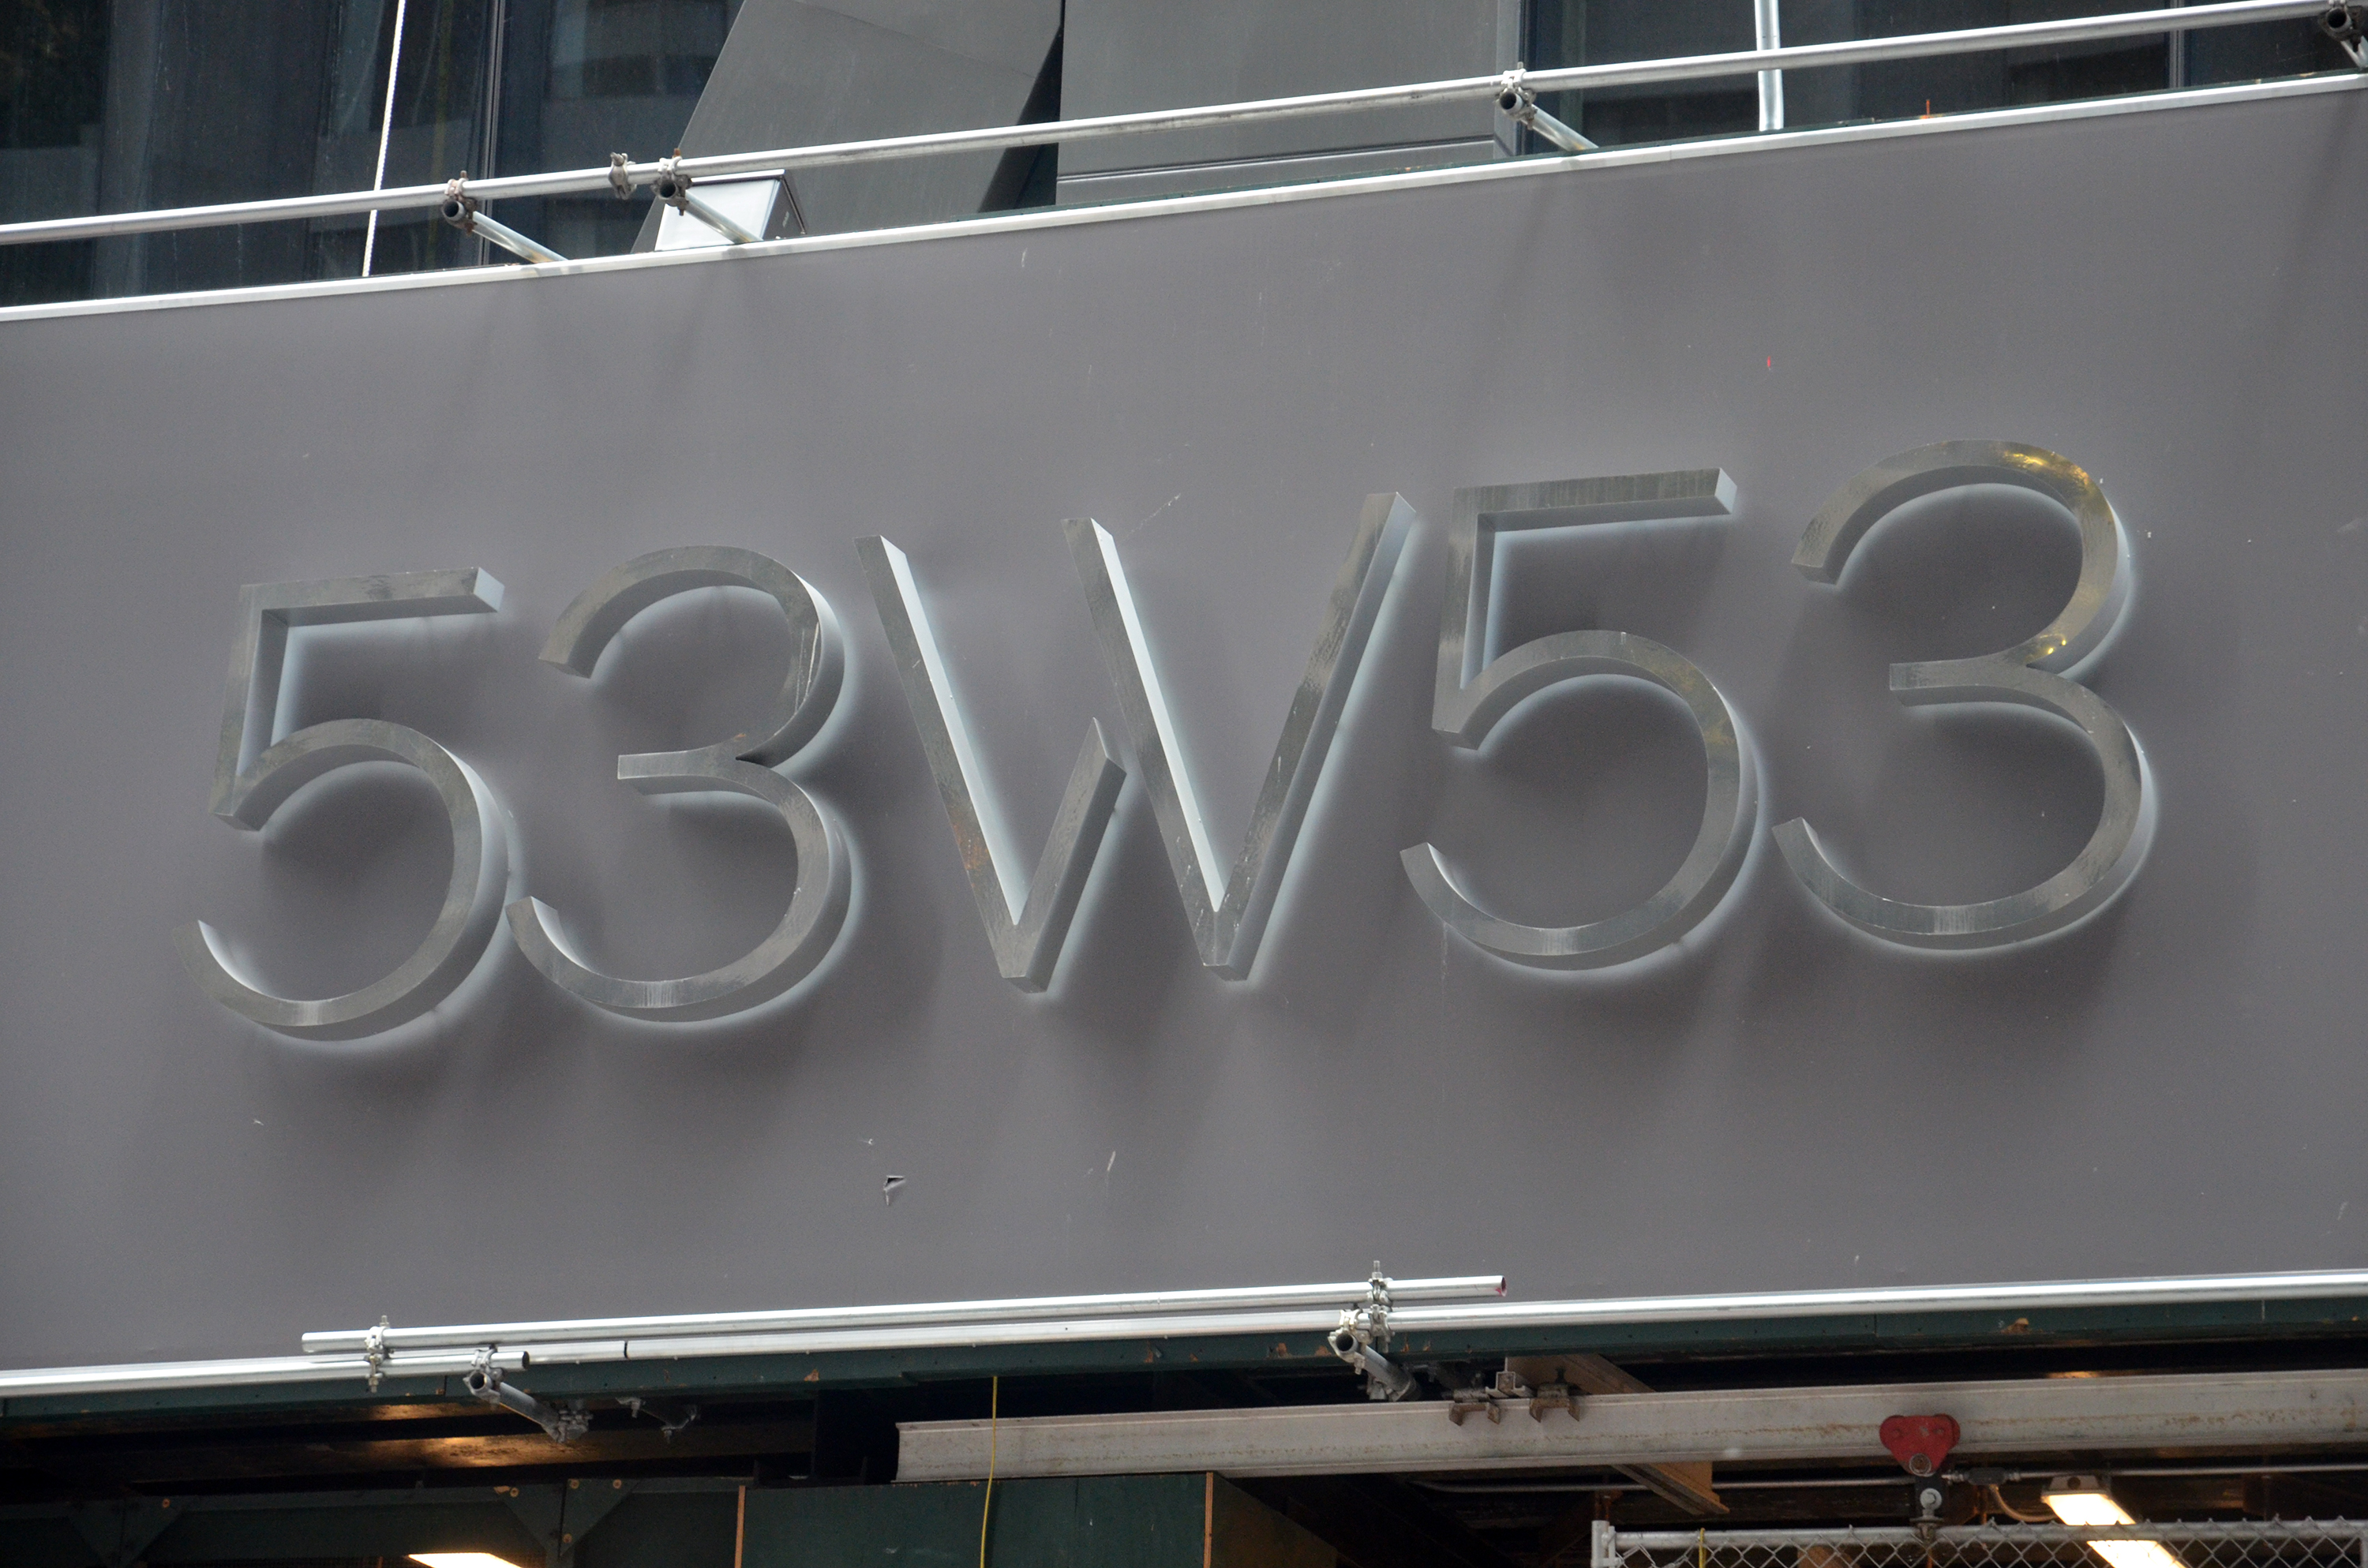 53W53 construction signage